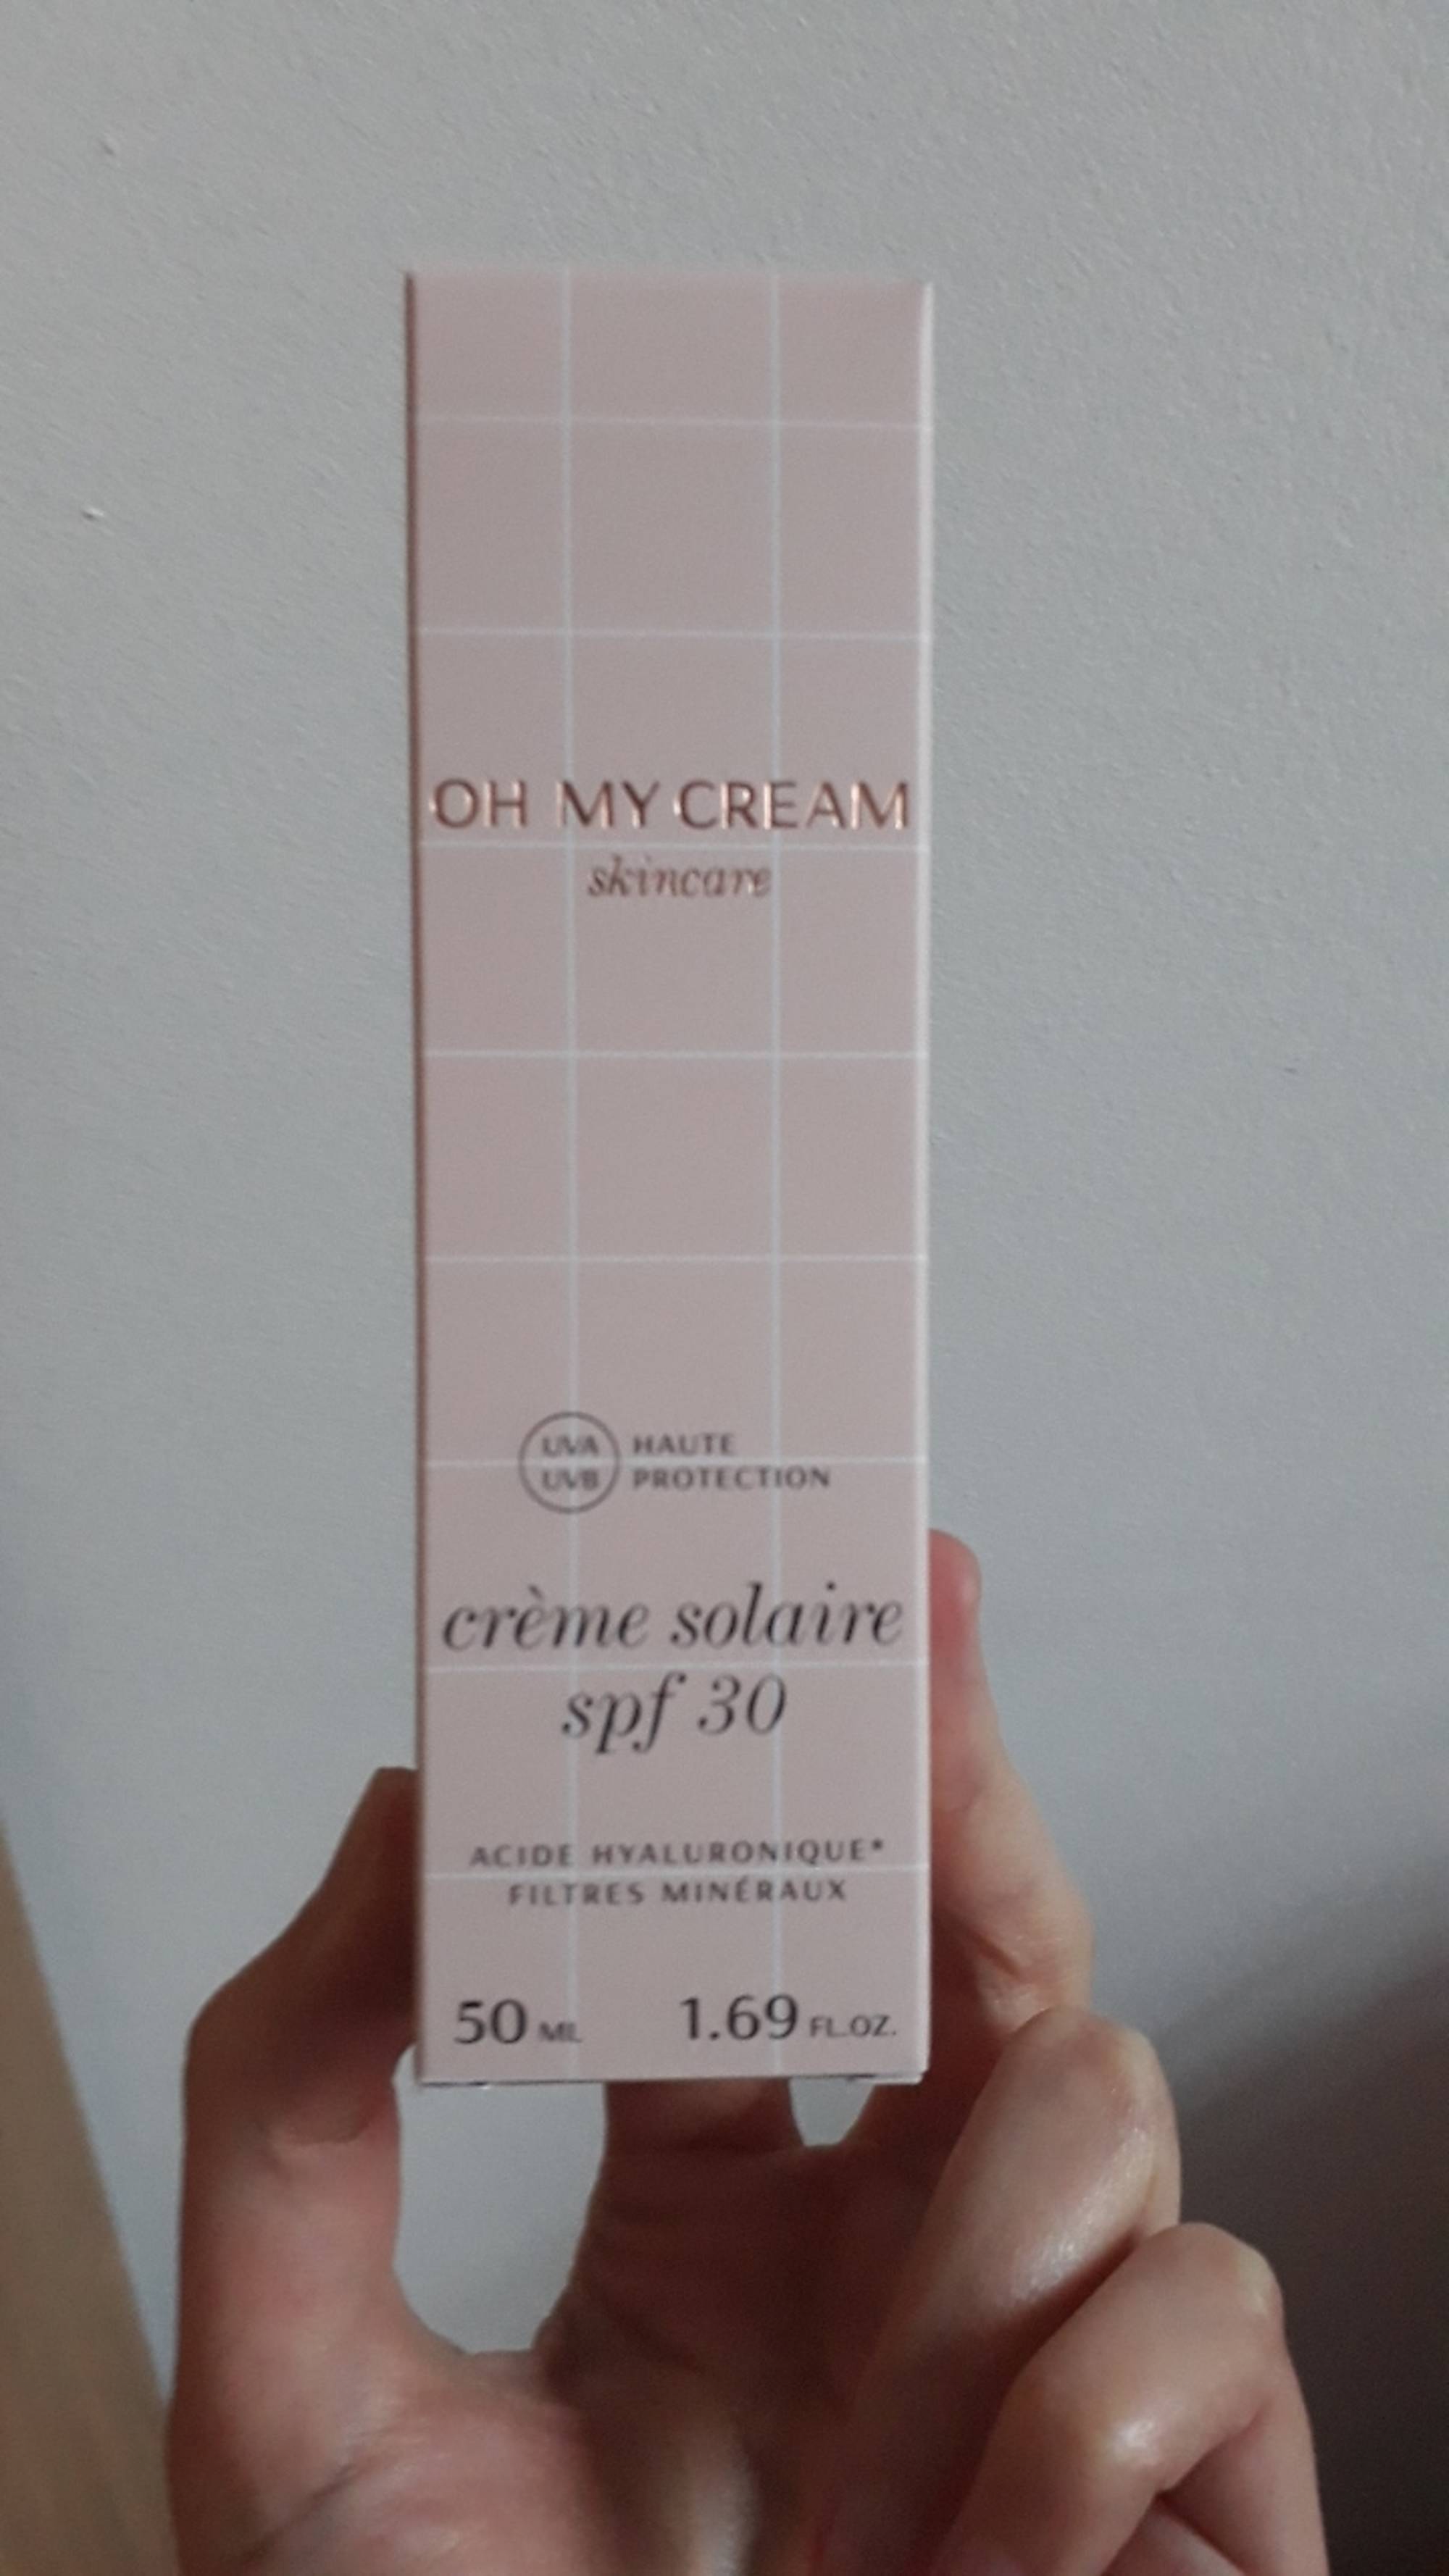 OH MY CREAM - Skincare - Crème solaire SPF 30